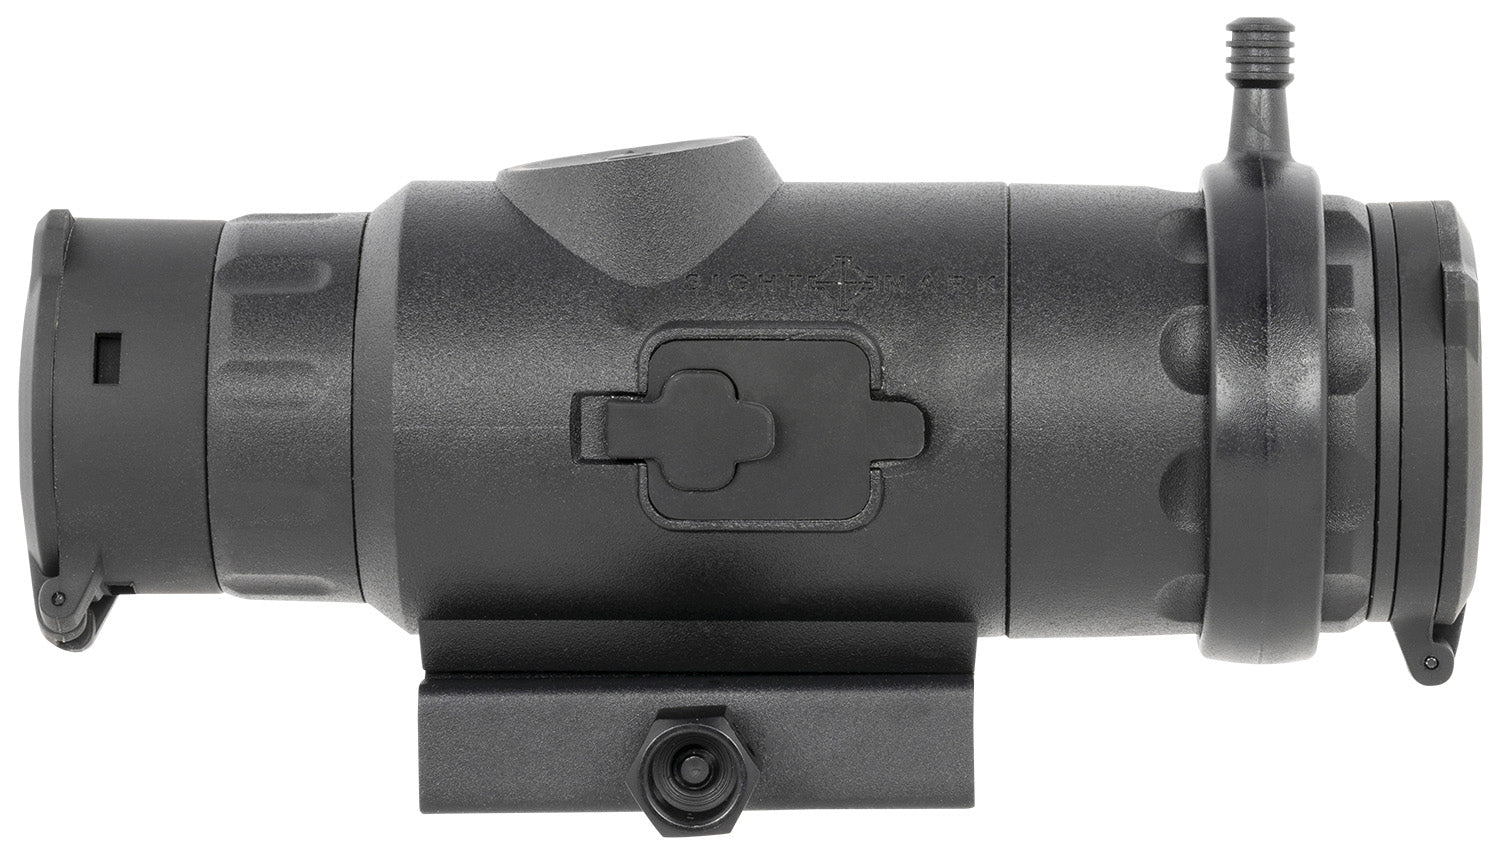 Sightmark Wraith 4K Mini Night Vision Riflescope